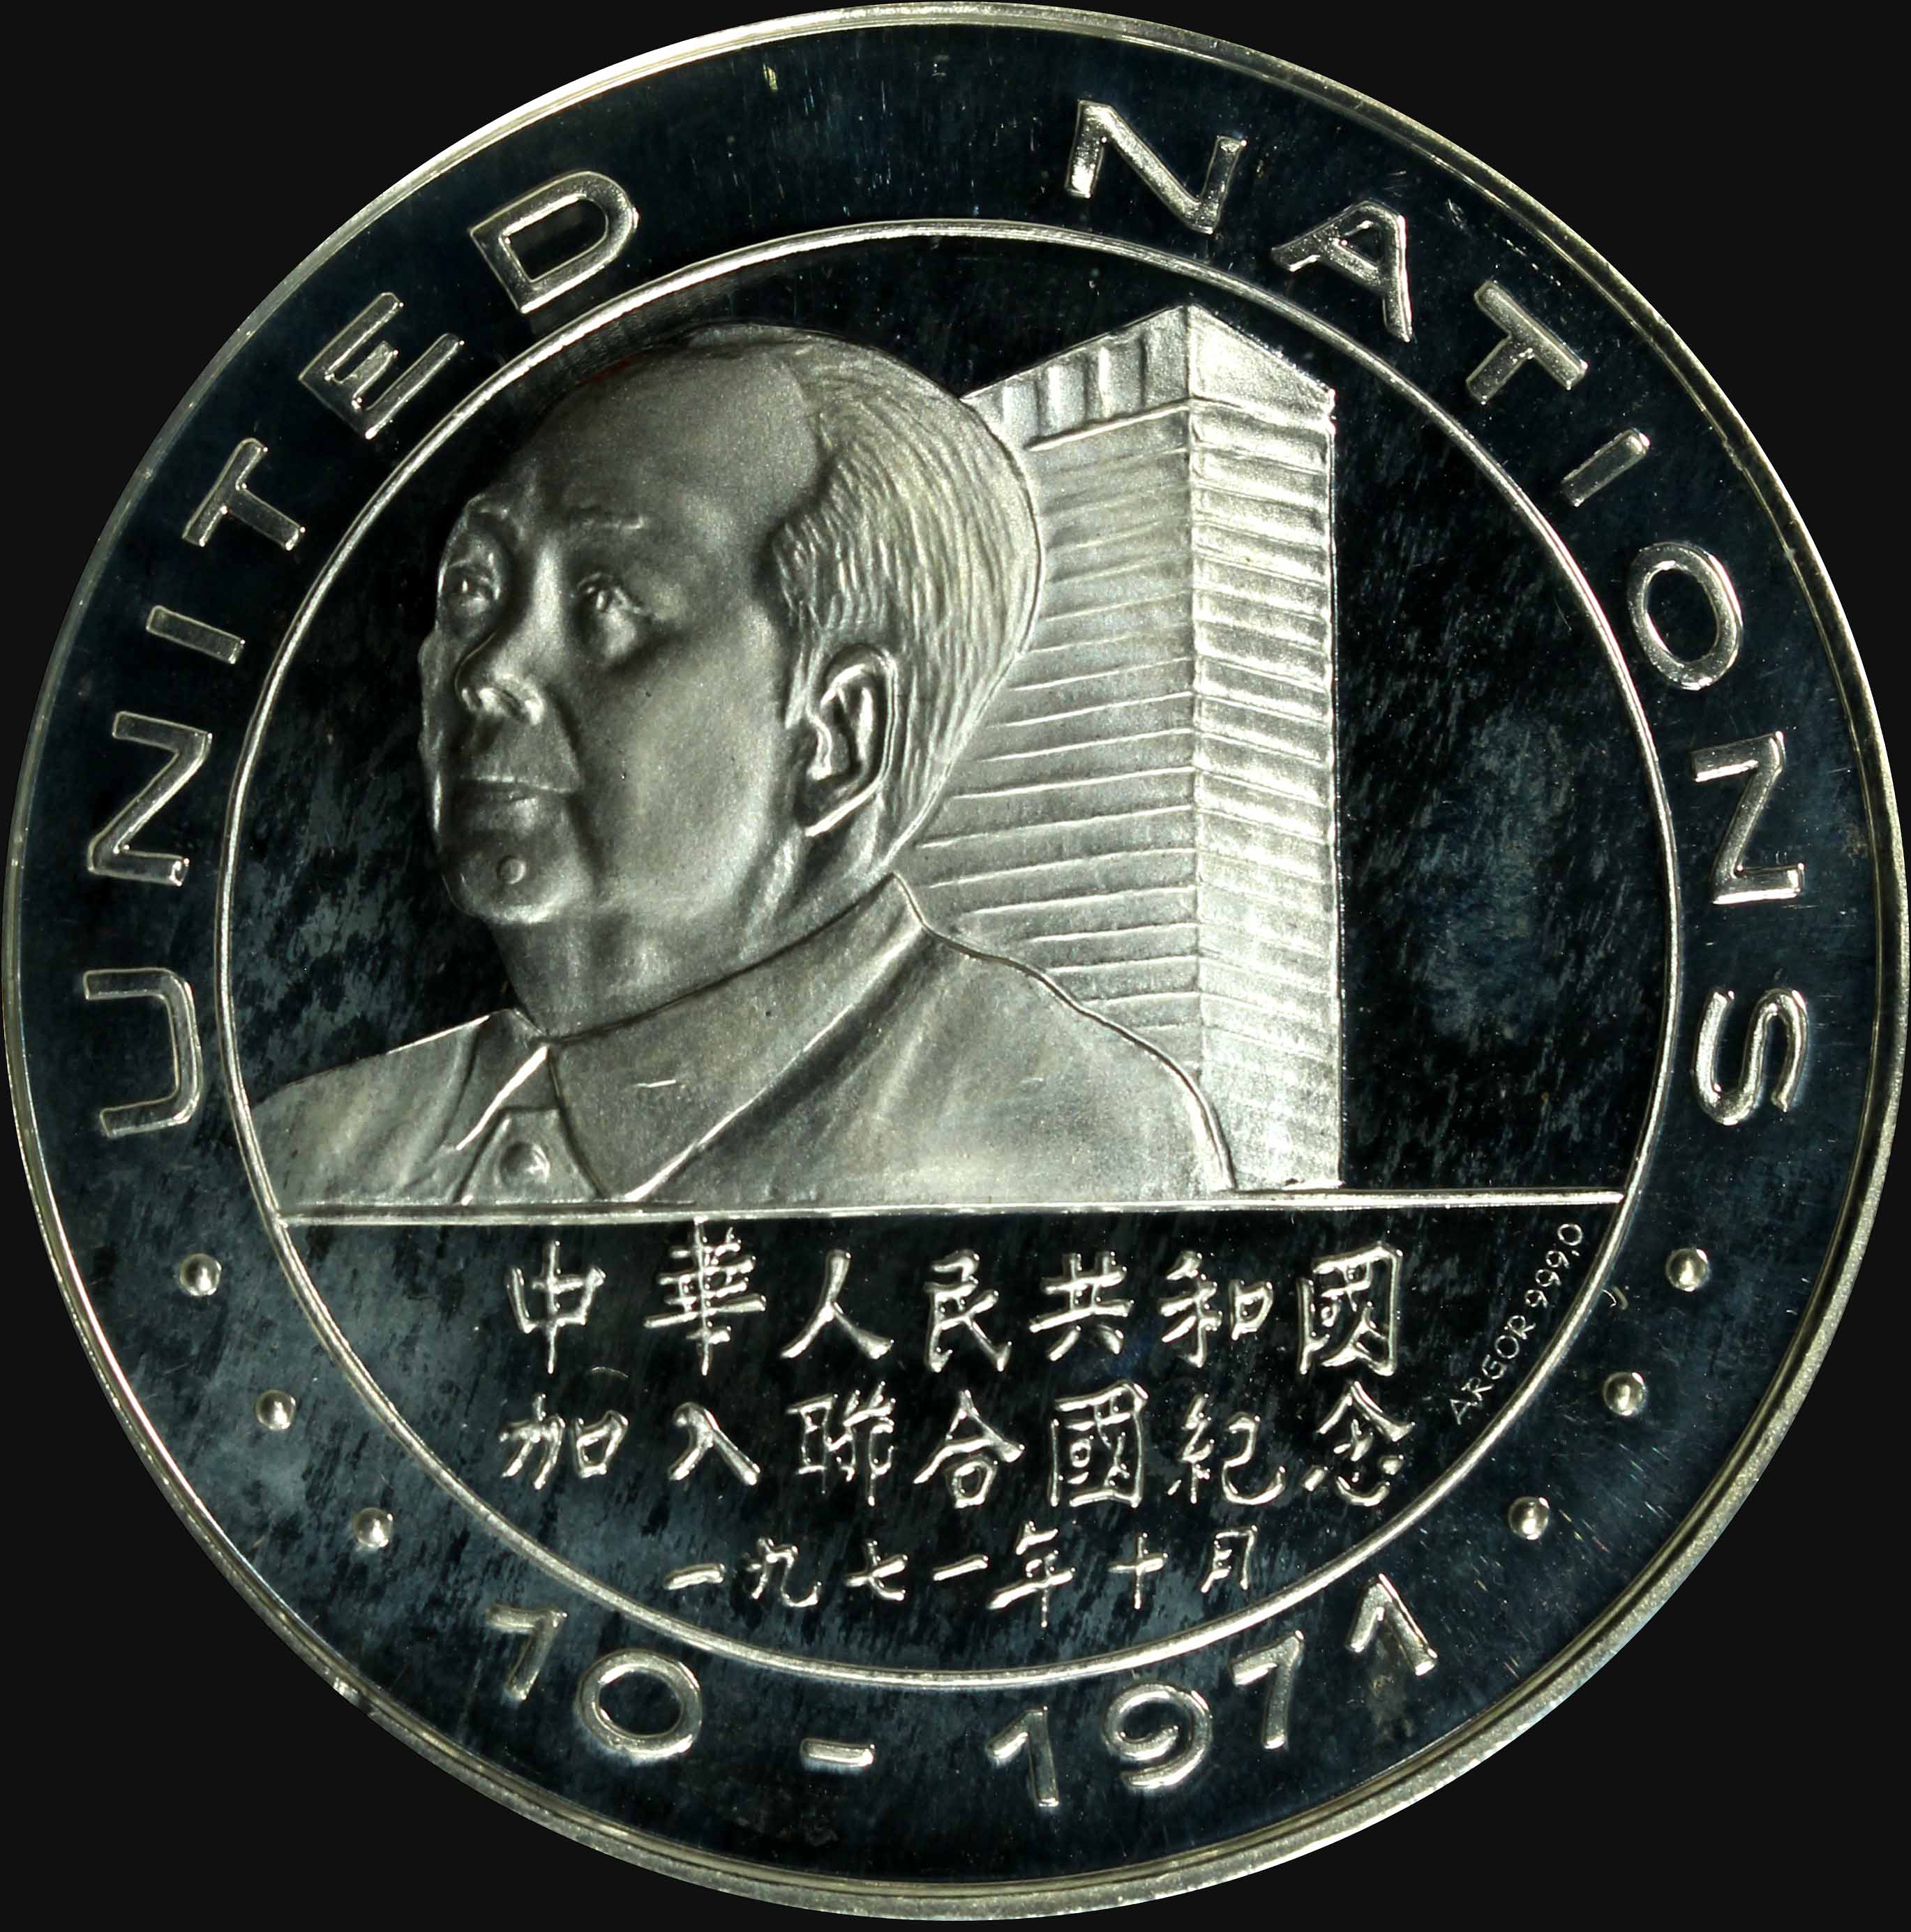 China, 1971, President Nixon Visit to Peking, Silver Proof medal 